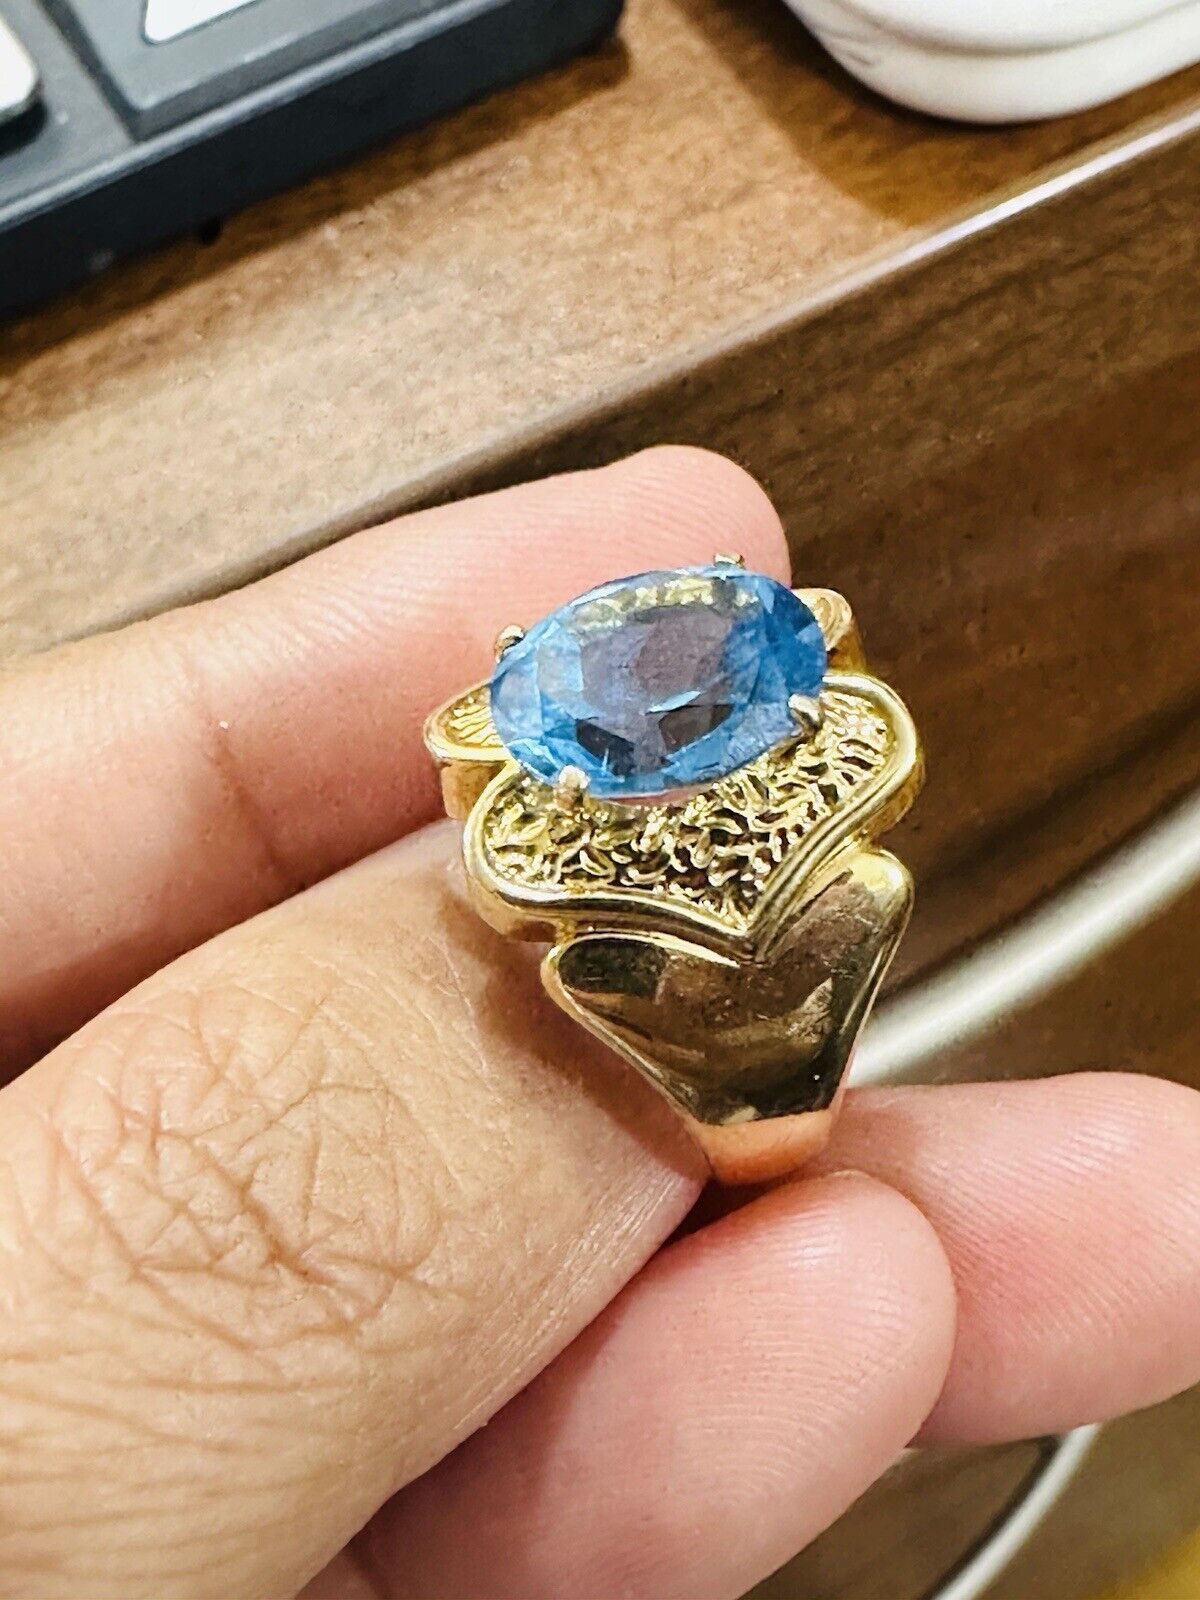 K18 Japan Gold Diamond Ring Real .49 carat Blue Topaz Woman’s Ring 7/7.5”  6.9g